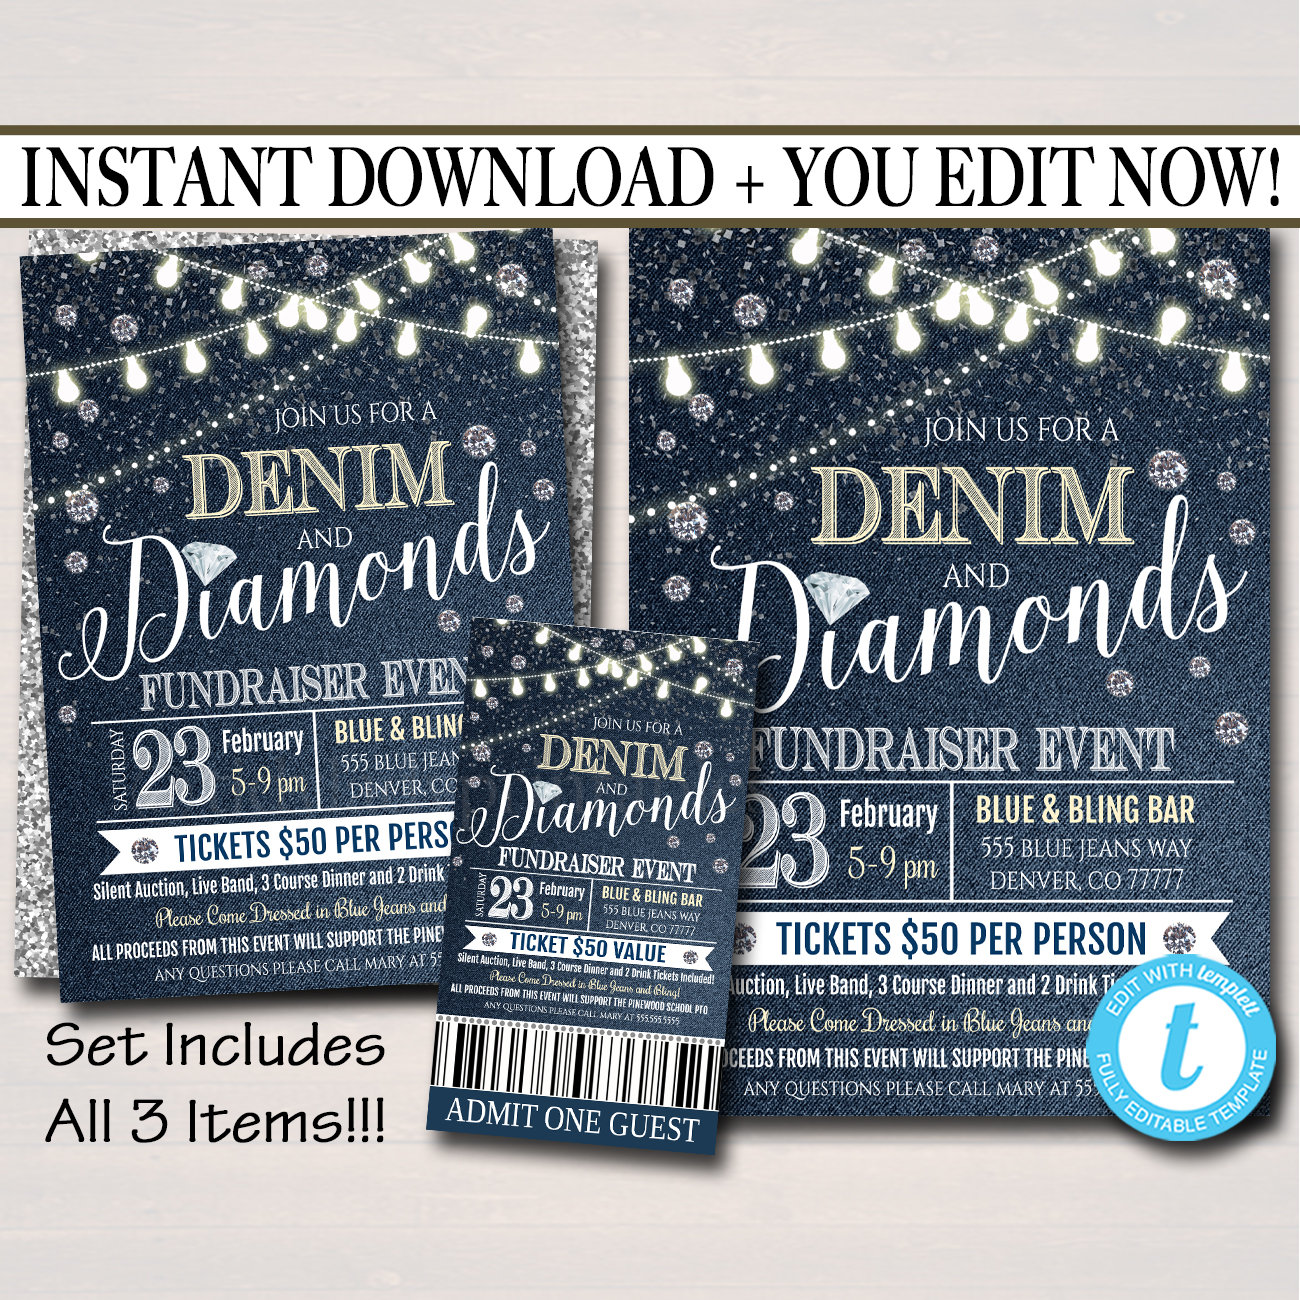 denim and diamonds theme party attire - Google Search  Denim and diamonds,  Diamond theme party, Diamond theme